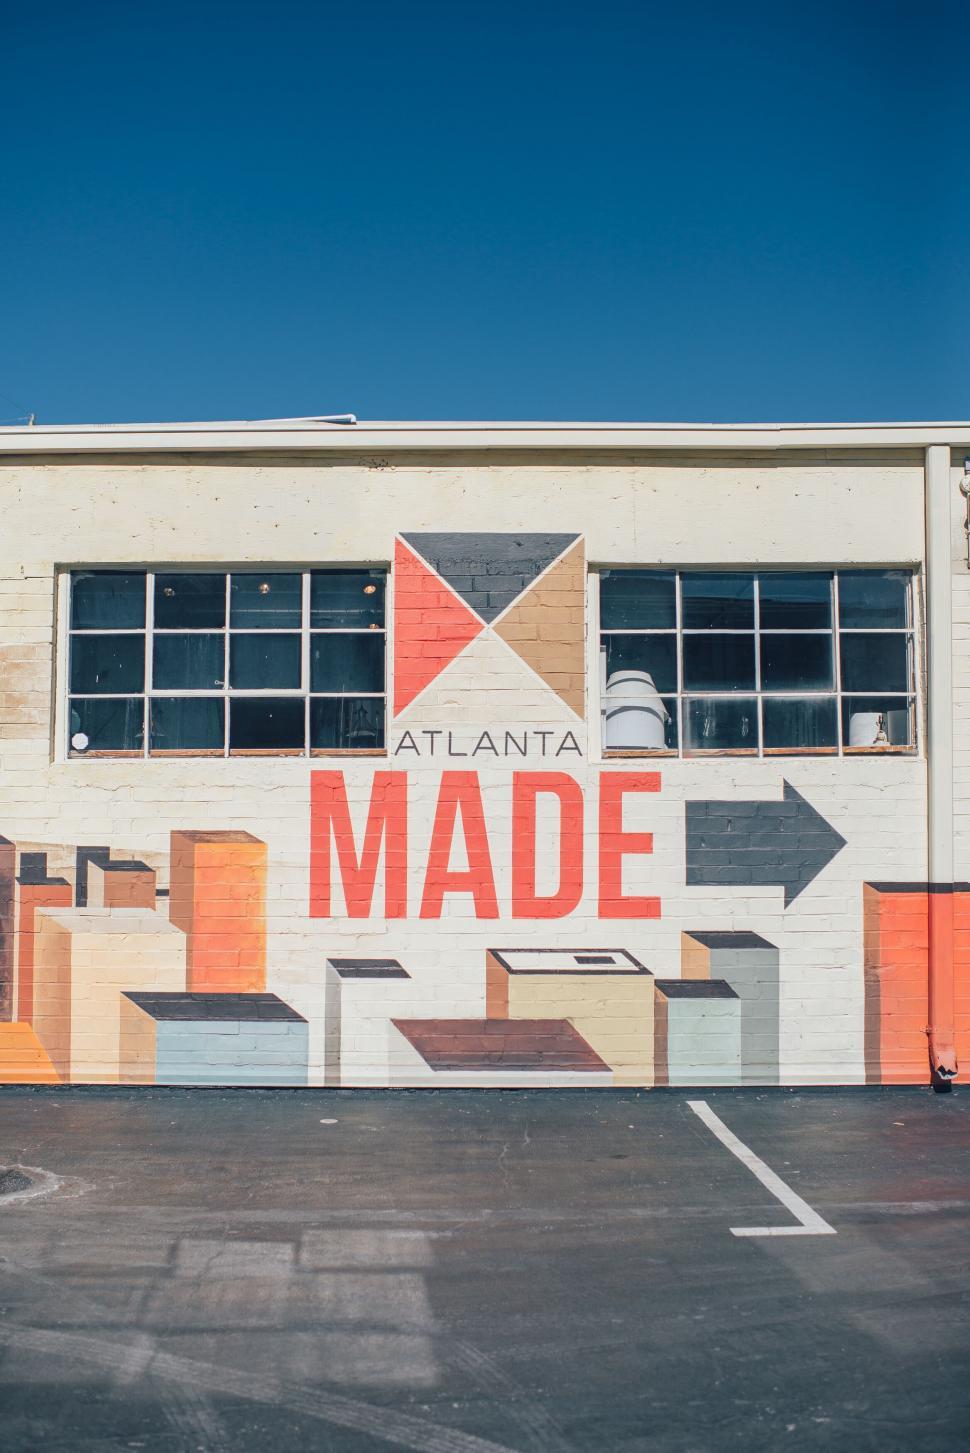 Free Image of ATLANTA MADE  mural on building 